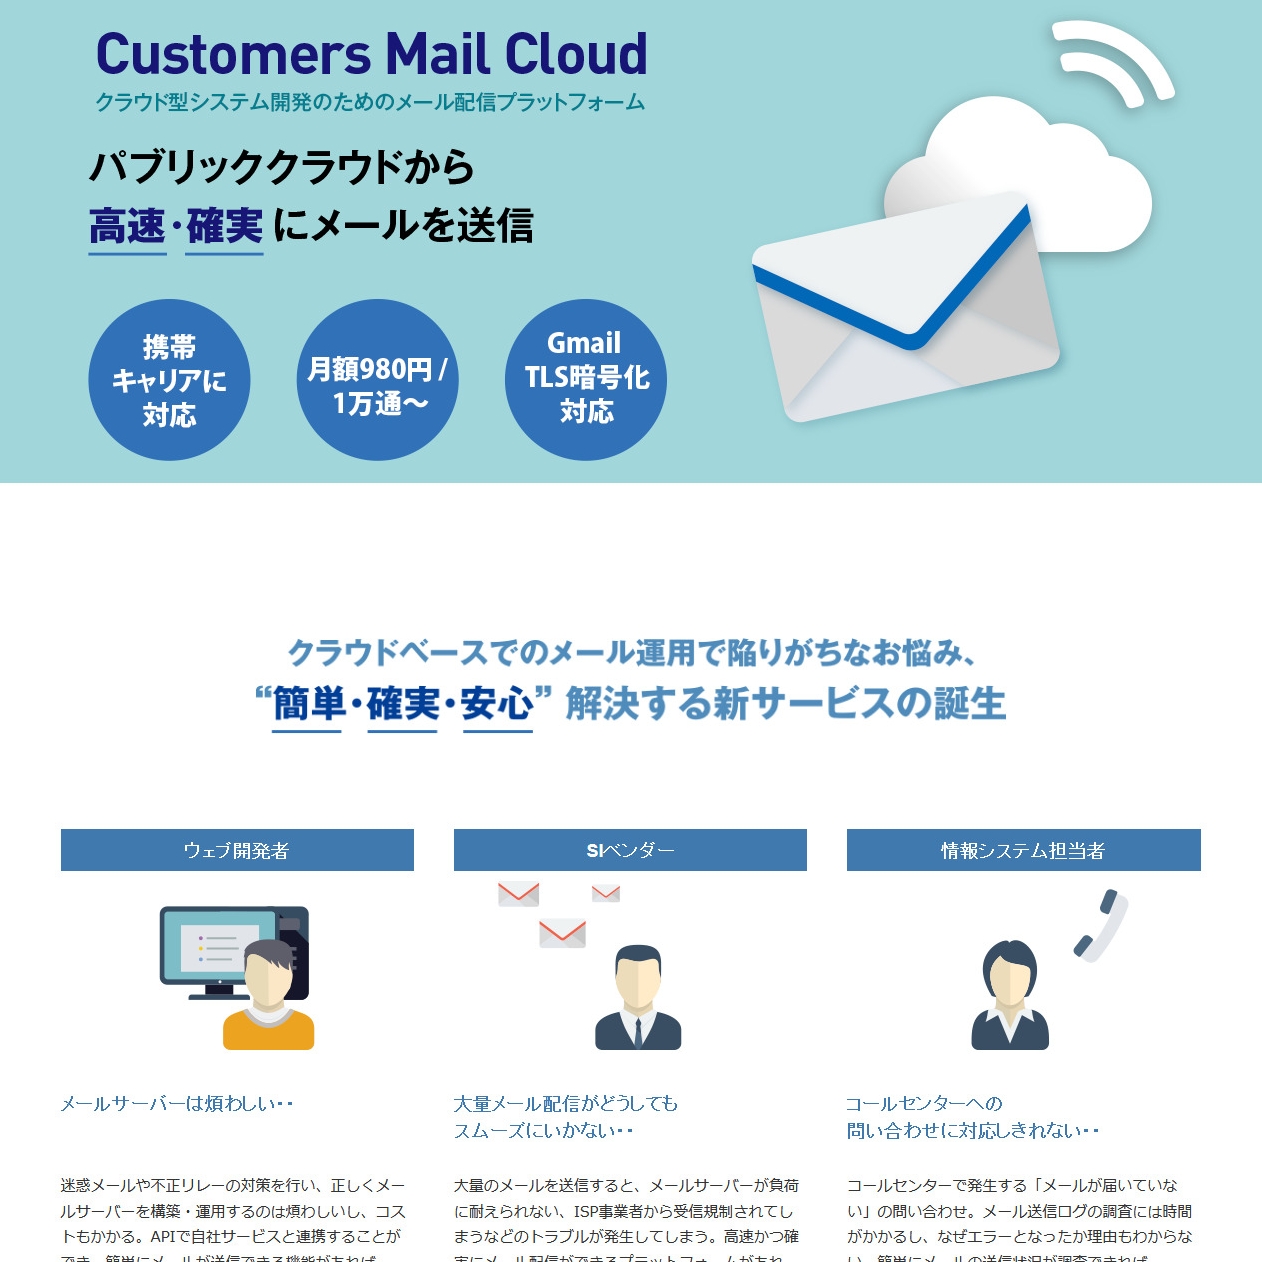 Customers Mail Cloud ランディングページ